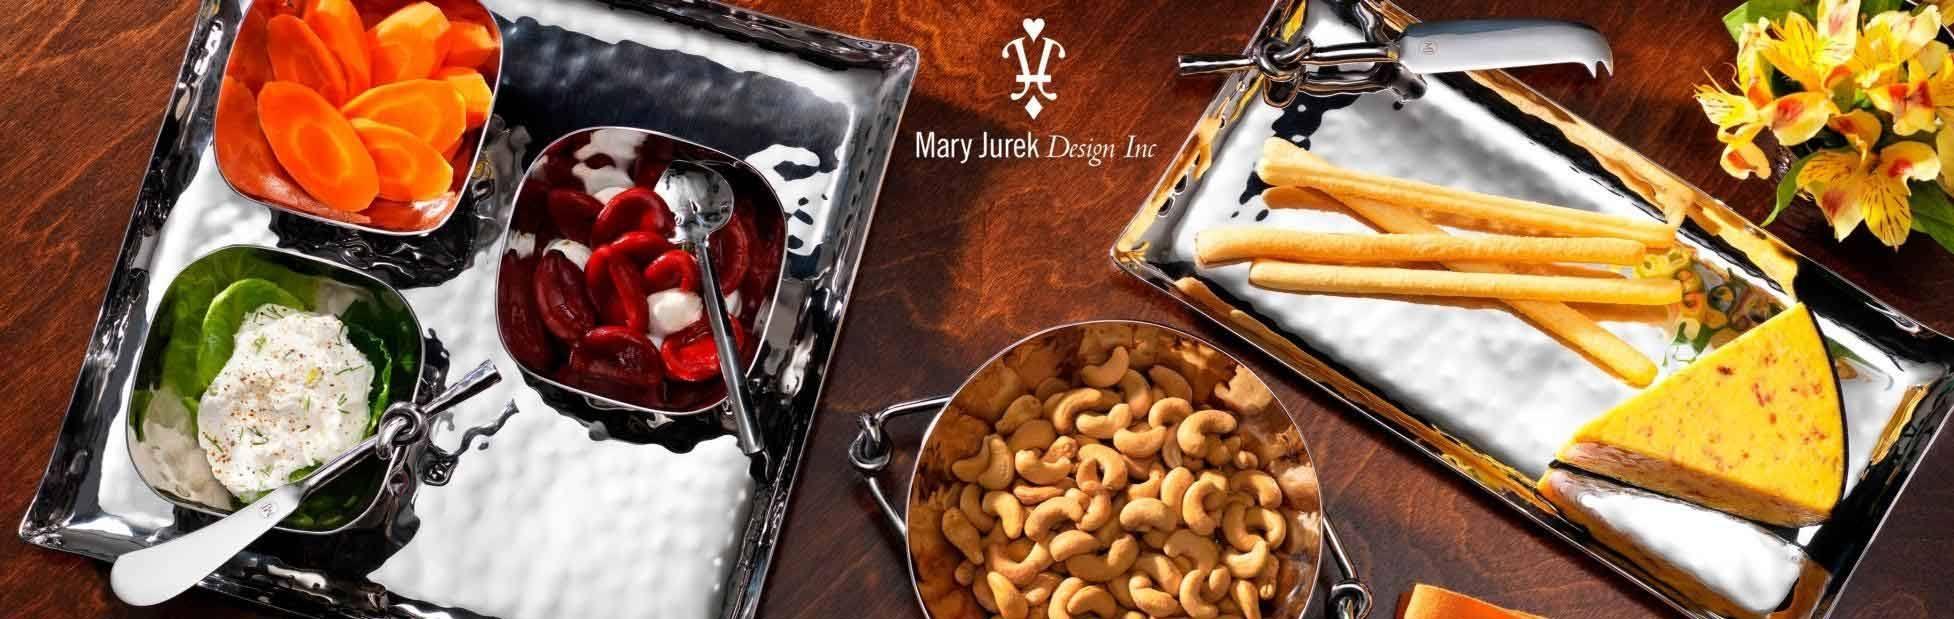 Mary Jurek lifestyle products slide 2